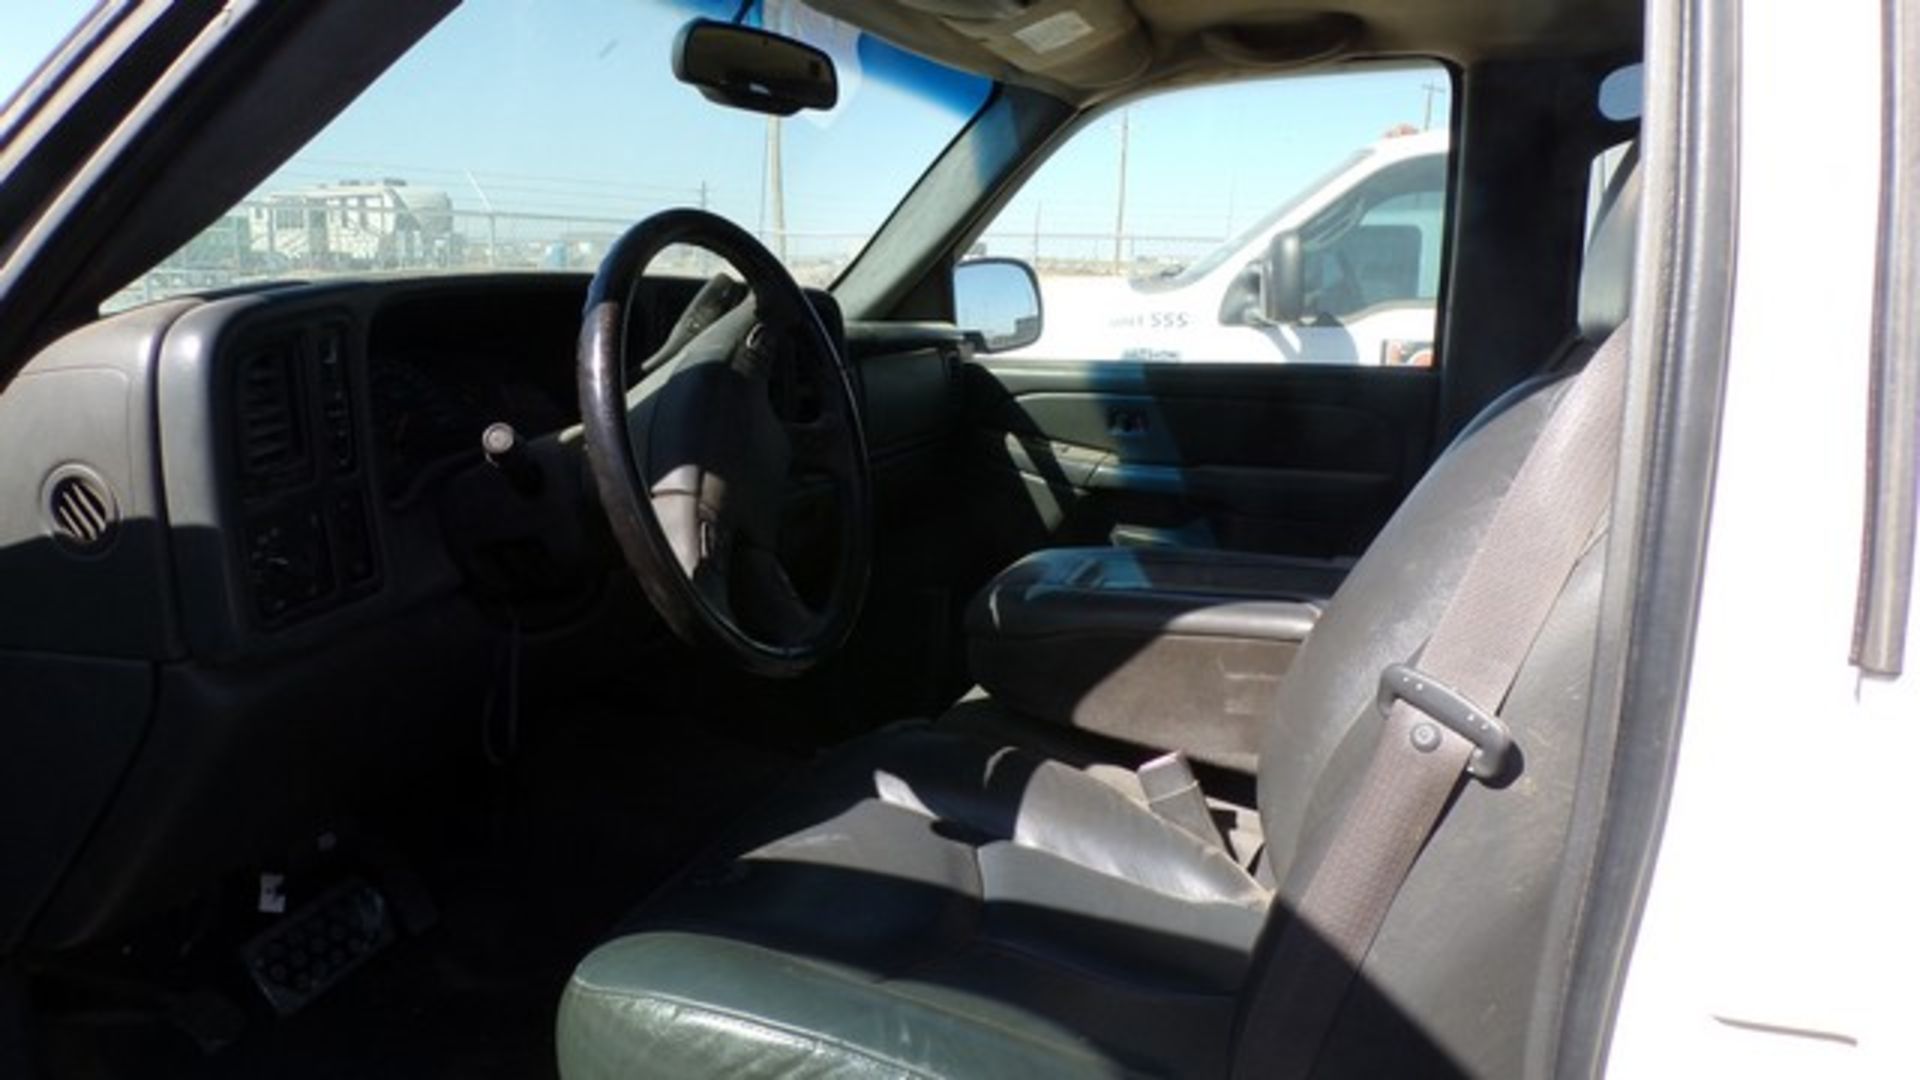 Located in YARD 1 - Midland, TX (2438) (X) 2006 CHEVROLET 2500HD LT CREW CAB FLATBED TRUCK, VIN- - Bild 5 aus 8